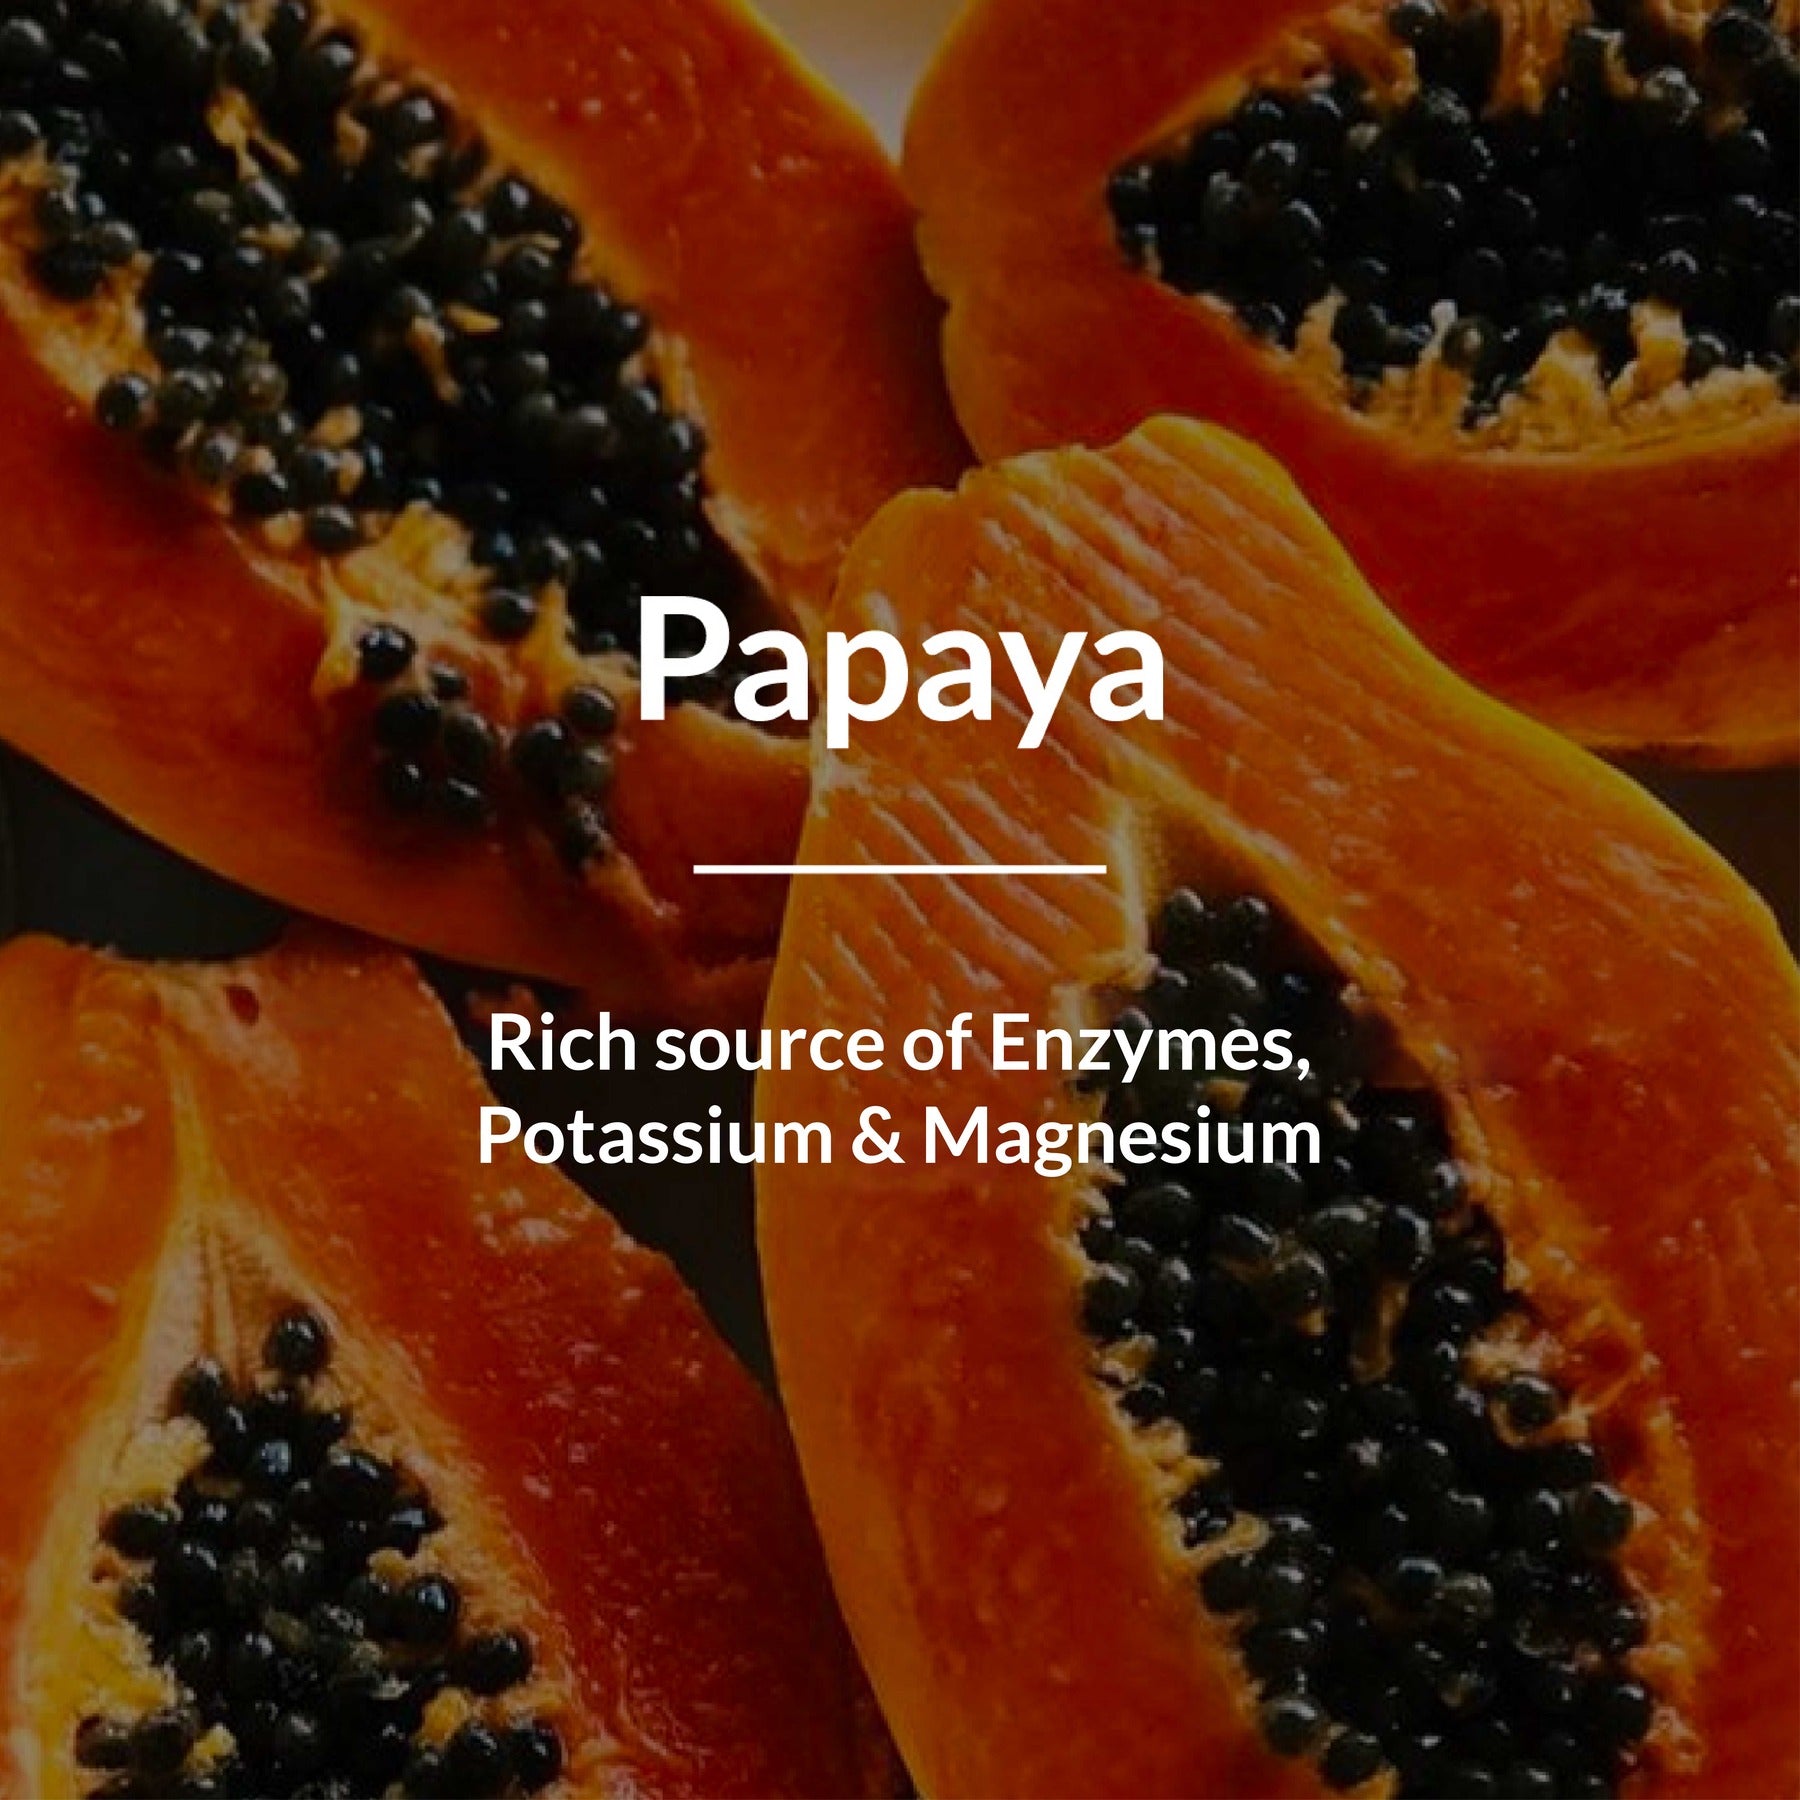 Papaya & Vitamin E Face Scrub